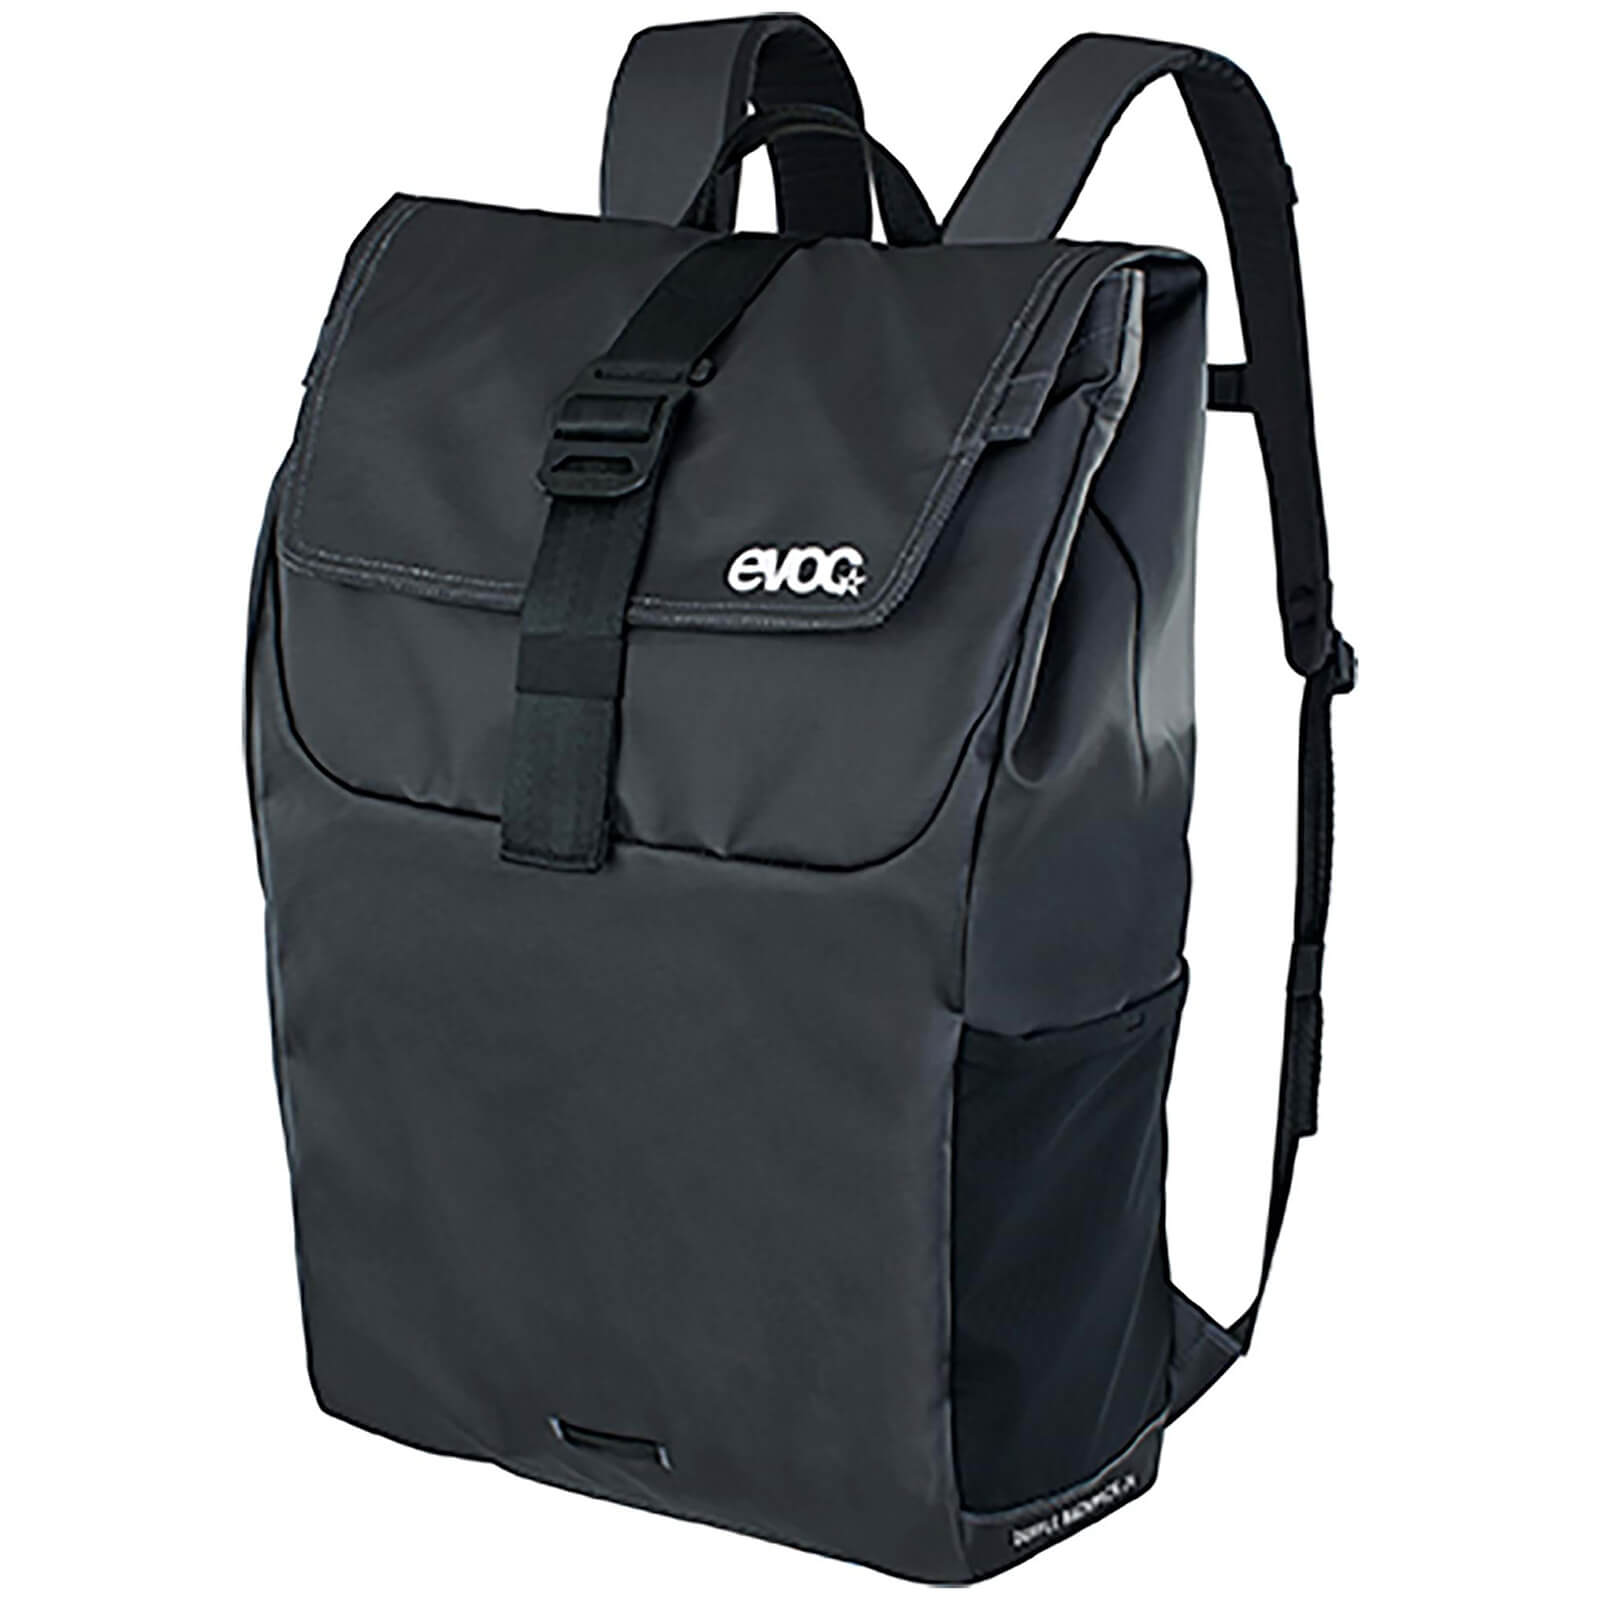 Evoc 16L Duffle Backpack - Carbon Grey/Black